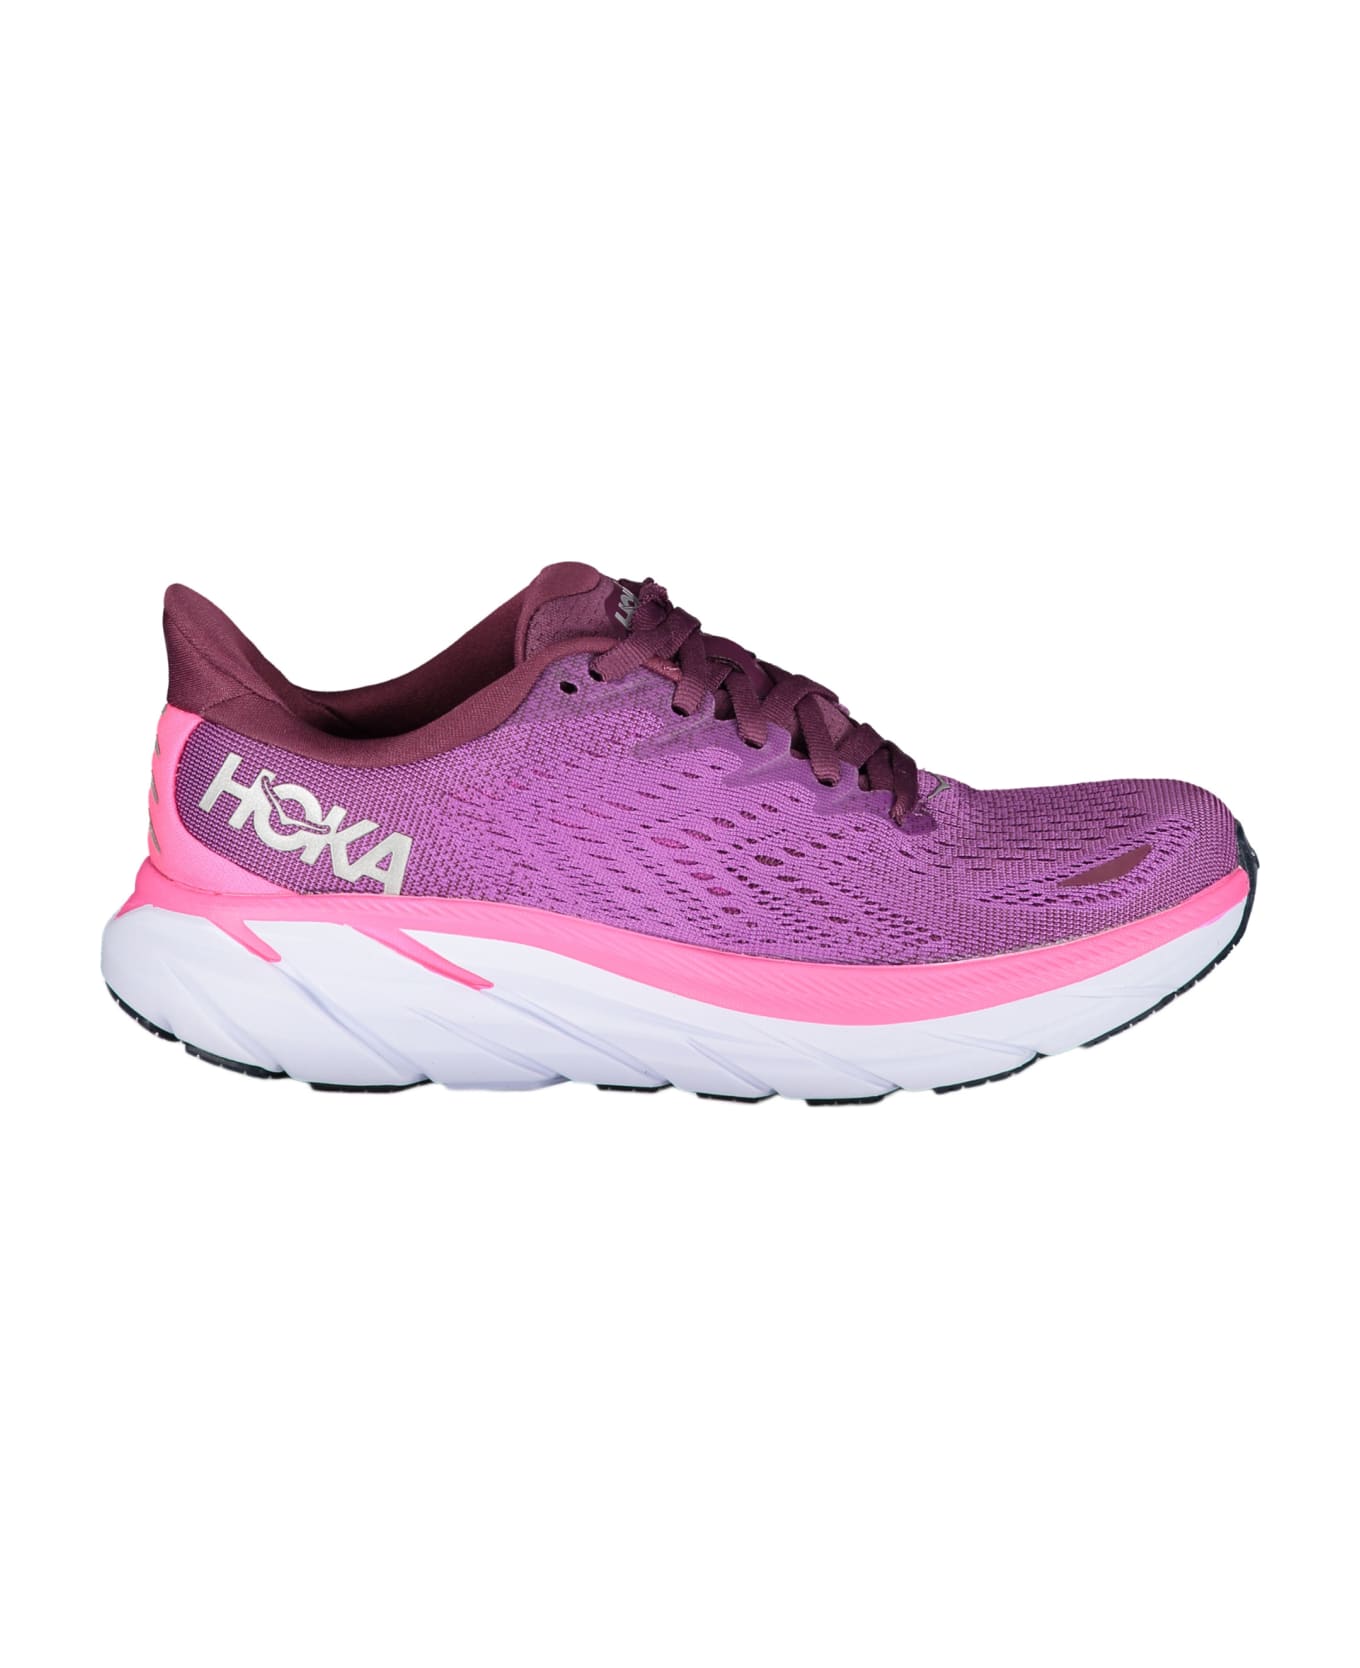 Hoka Low-top Sneakers - Red-purple or grape